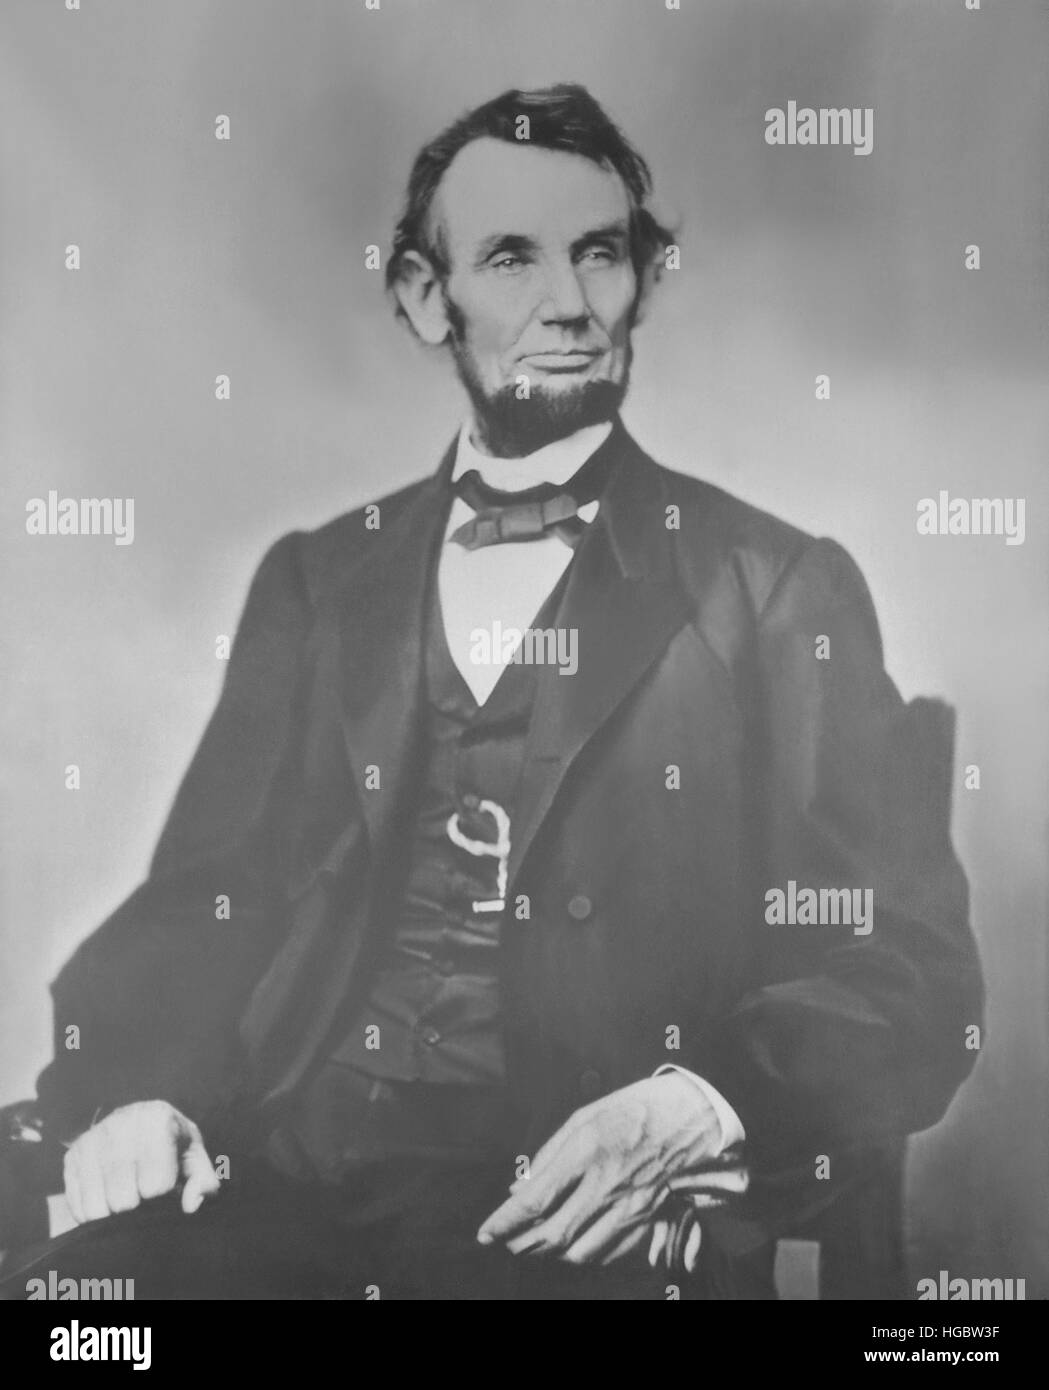 Porträt von Präsident Abraham Lincoln. Stockfoto